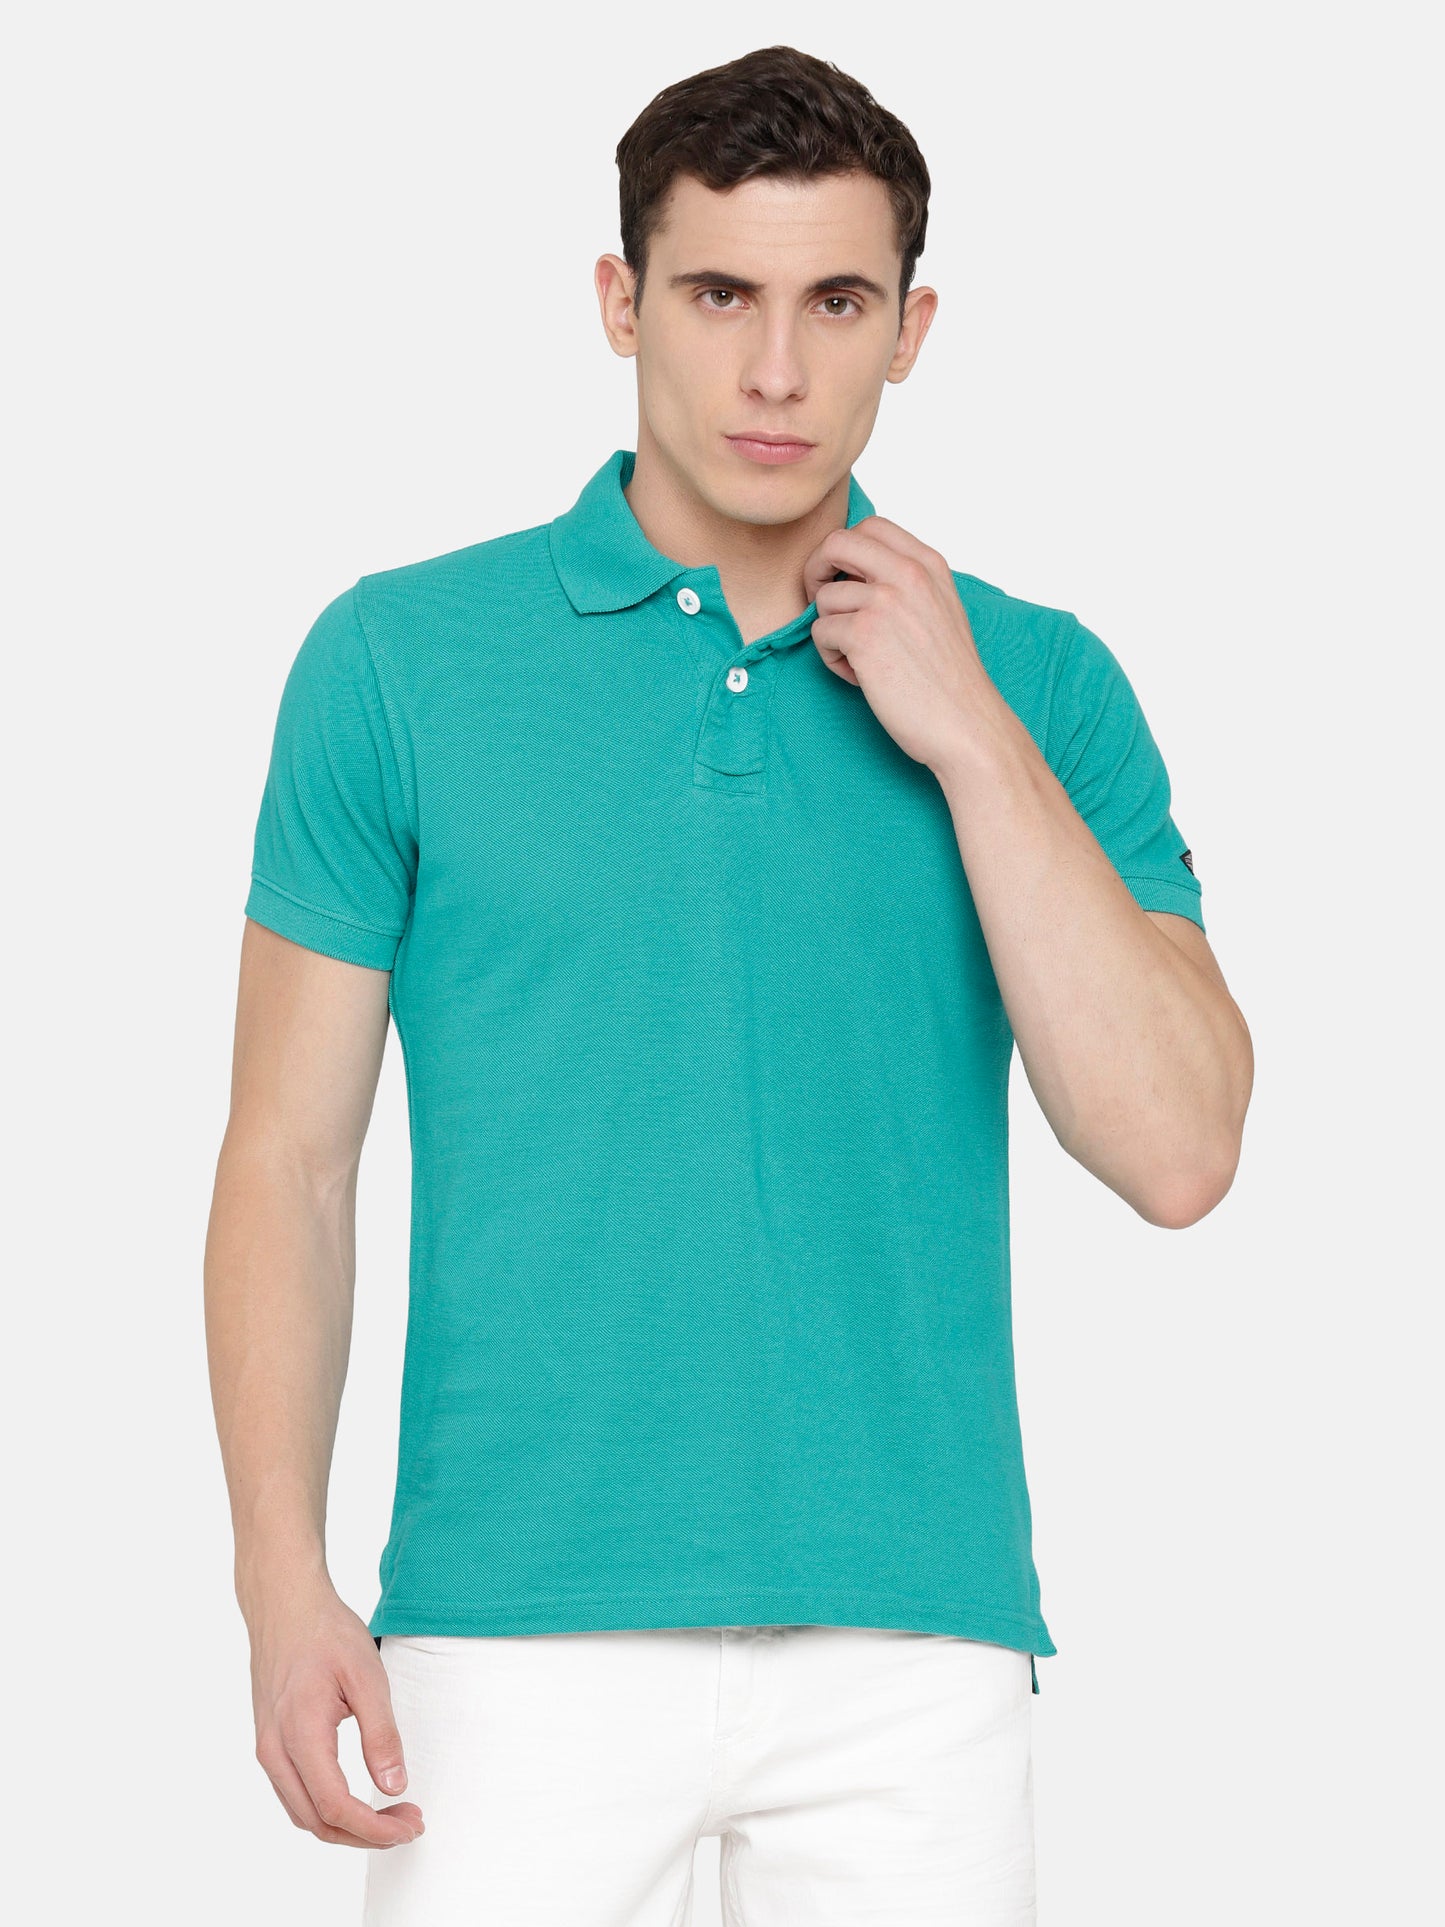 Slim Fit Aqua Green Polo T-Shirt in pique fabric